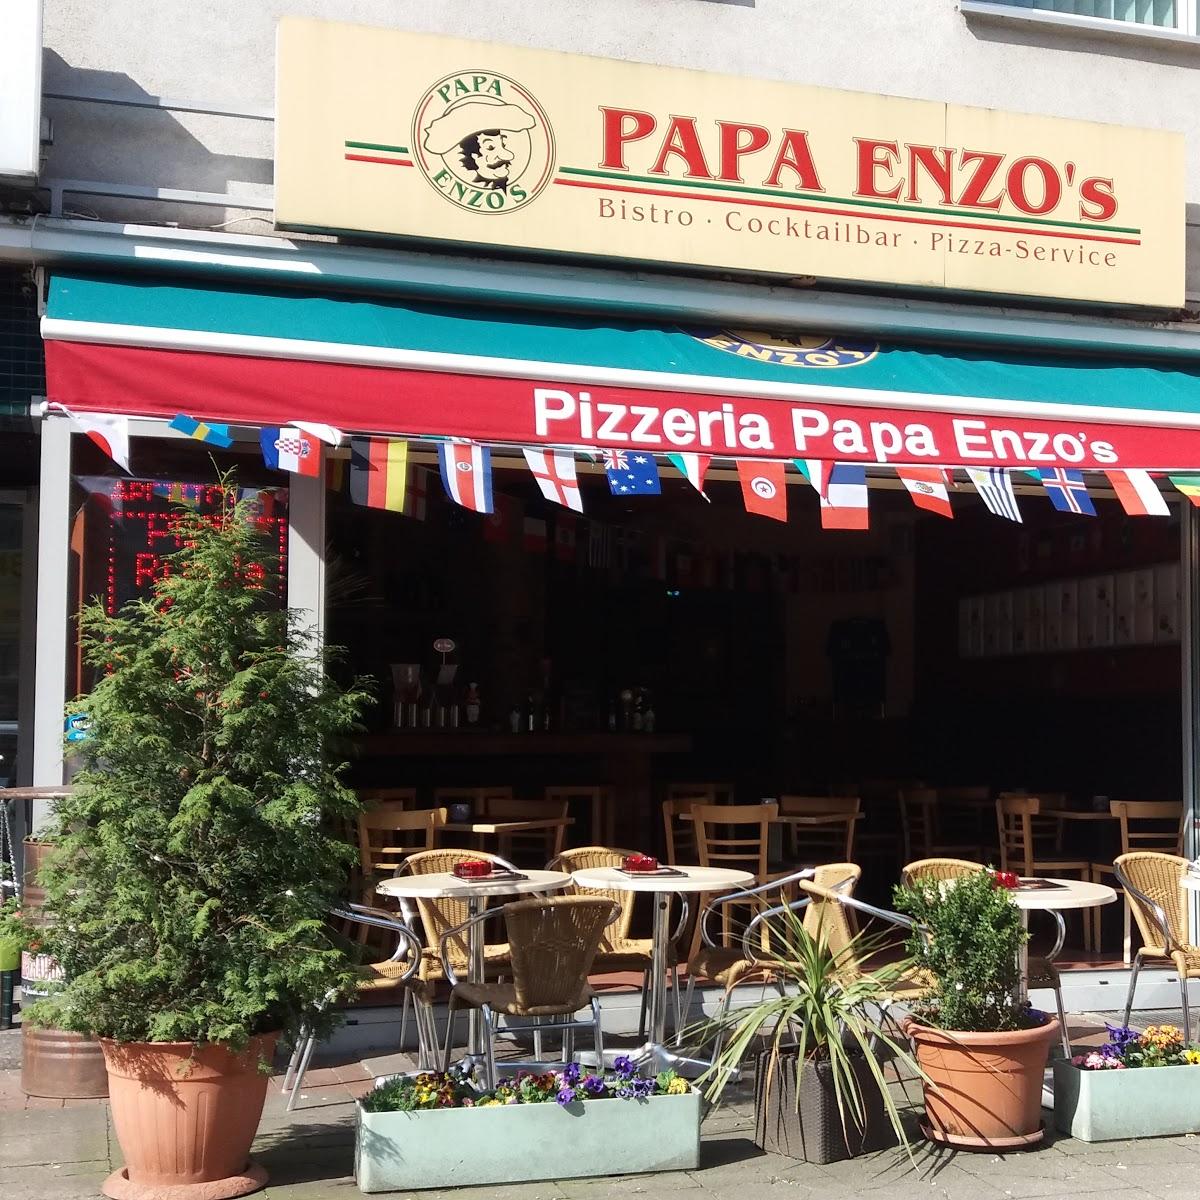 Restaurant "Papa Enzo